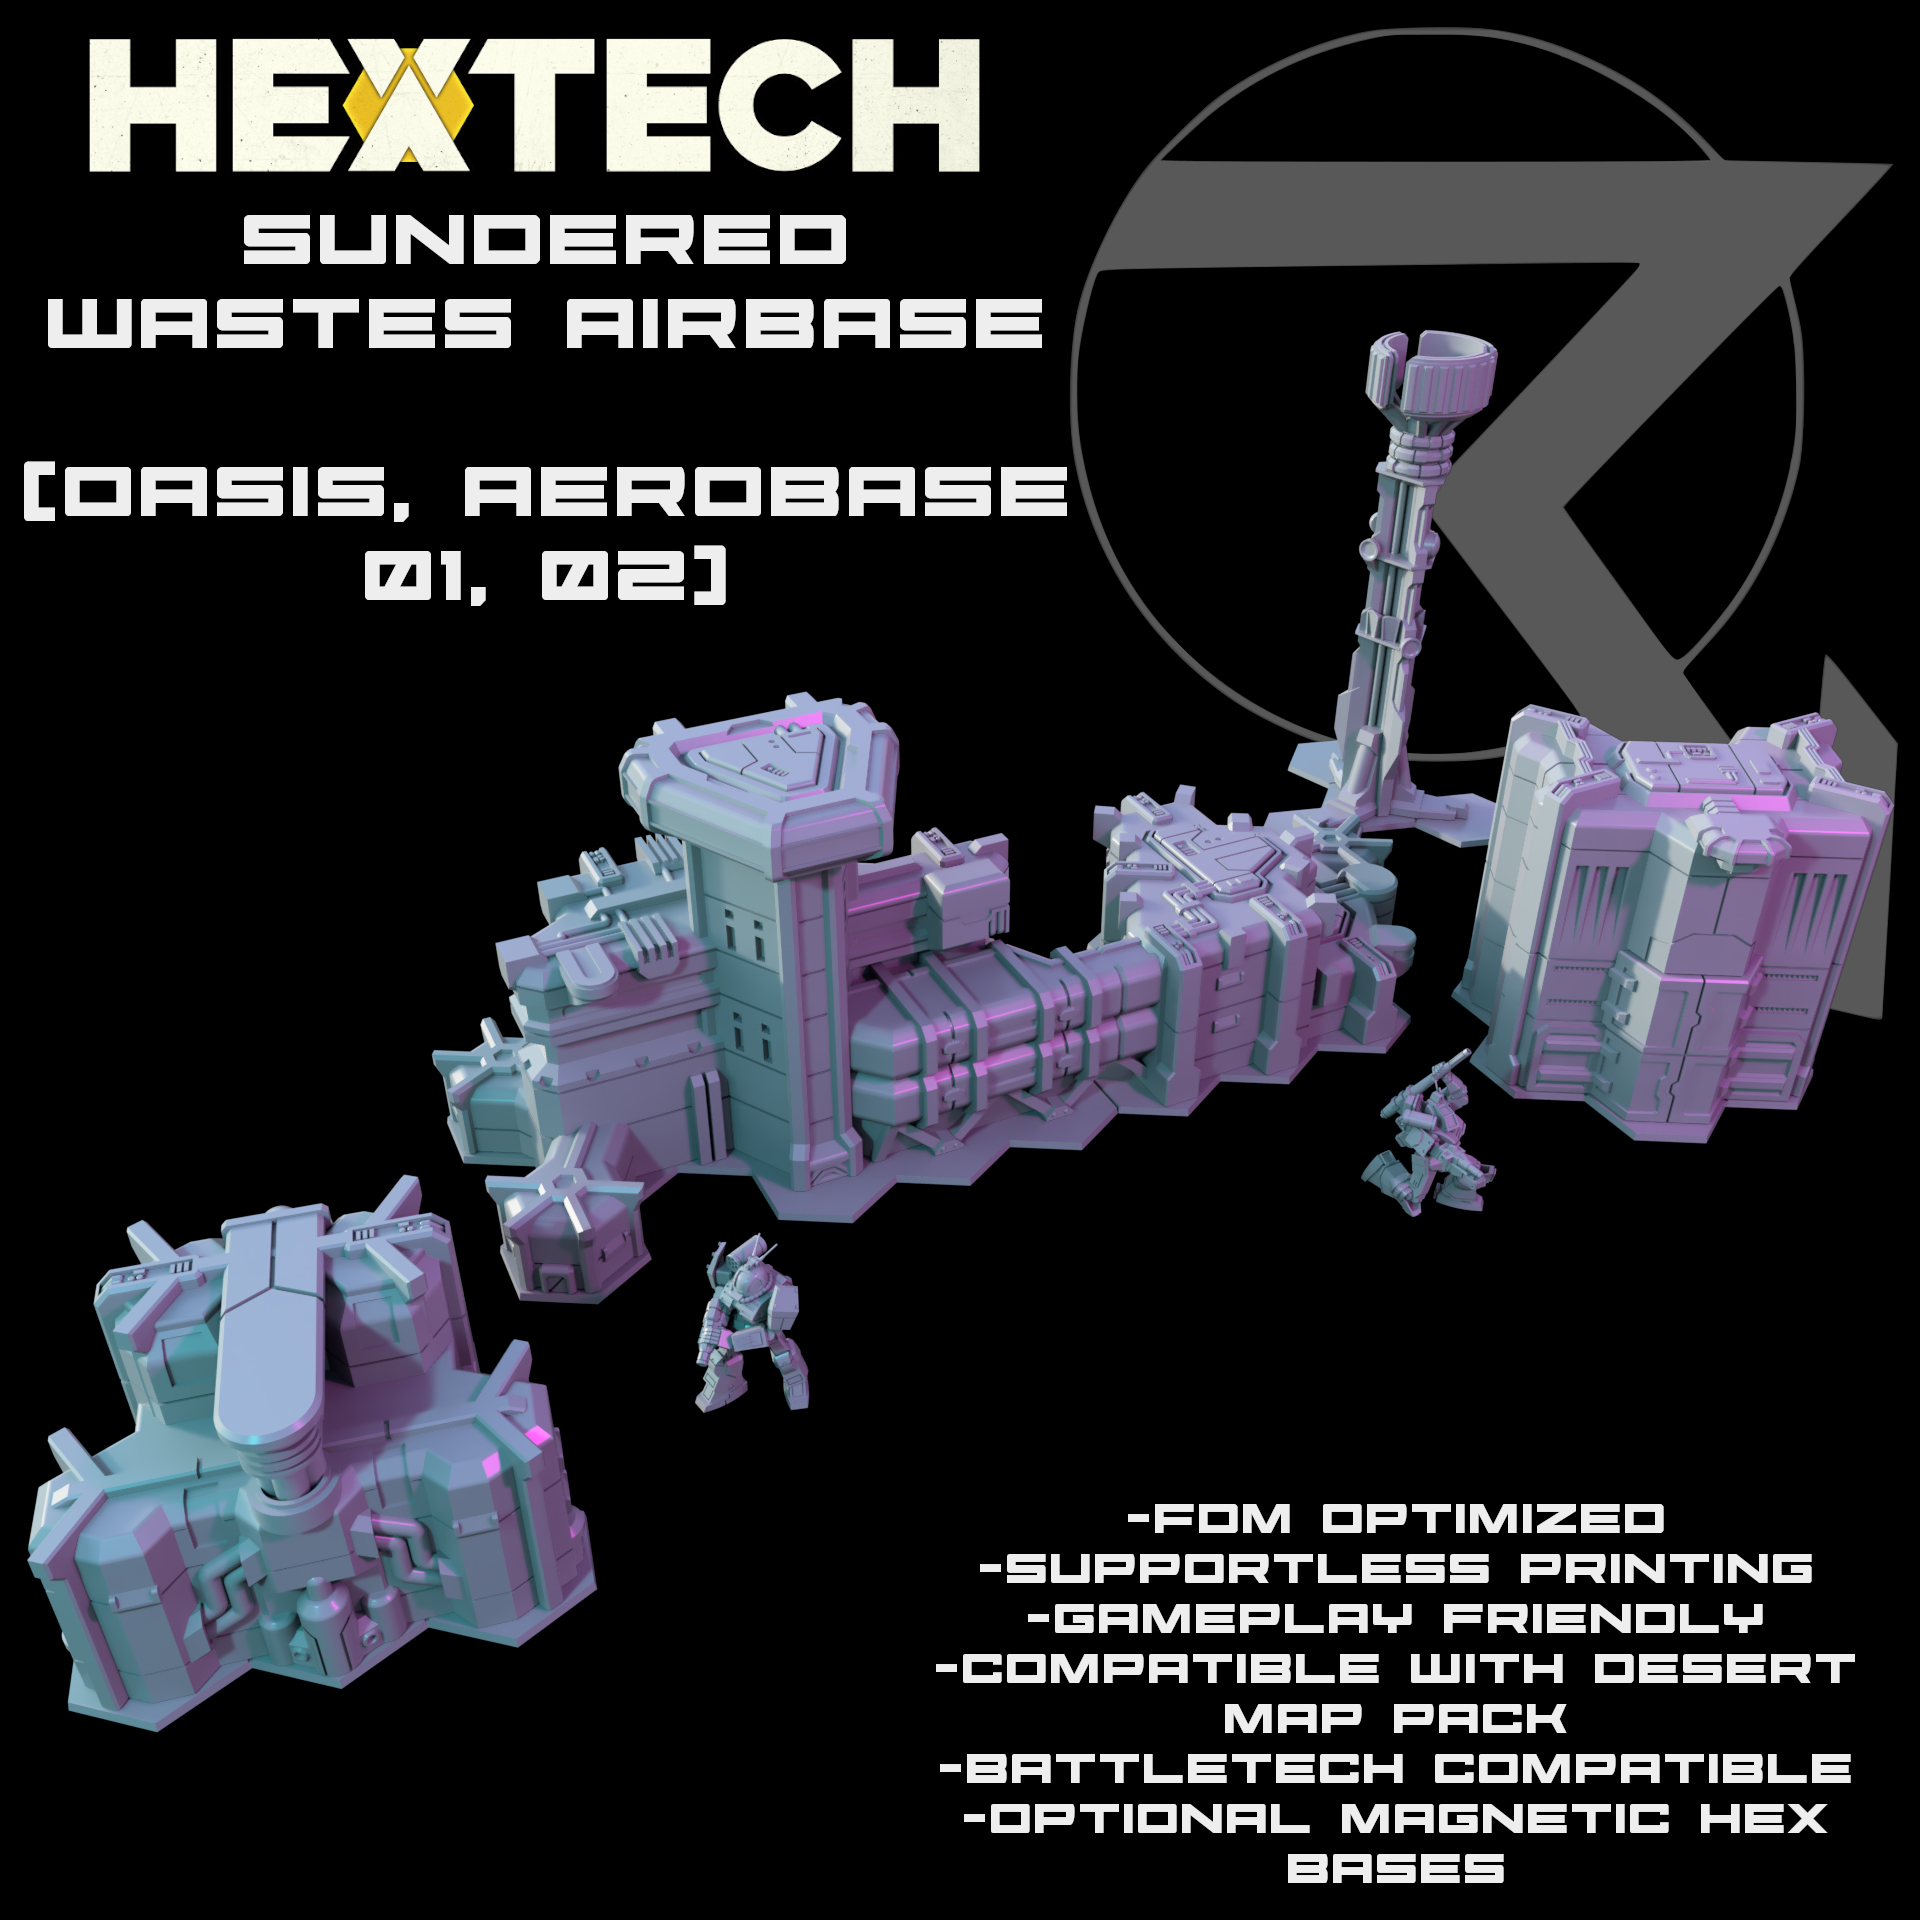 HEXTECH Sundered Wastes Airbase Core set for Battletech